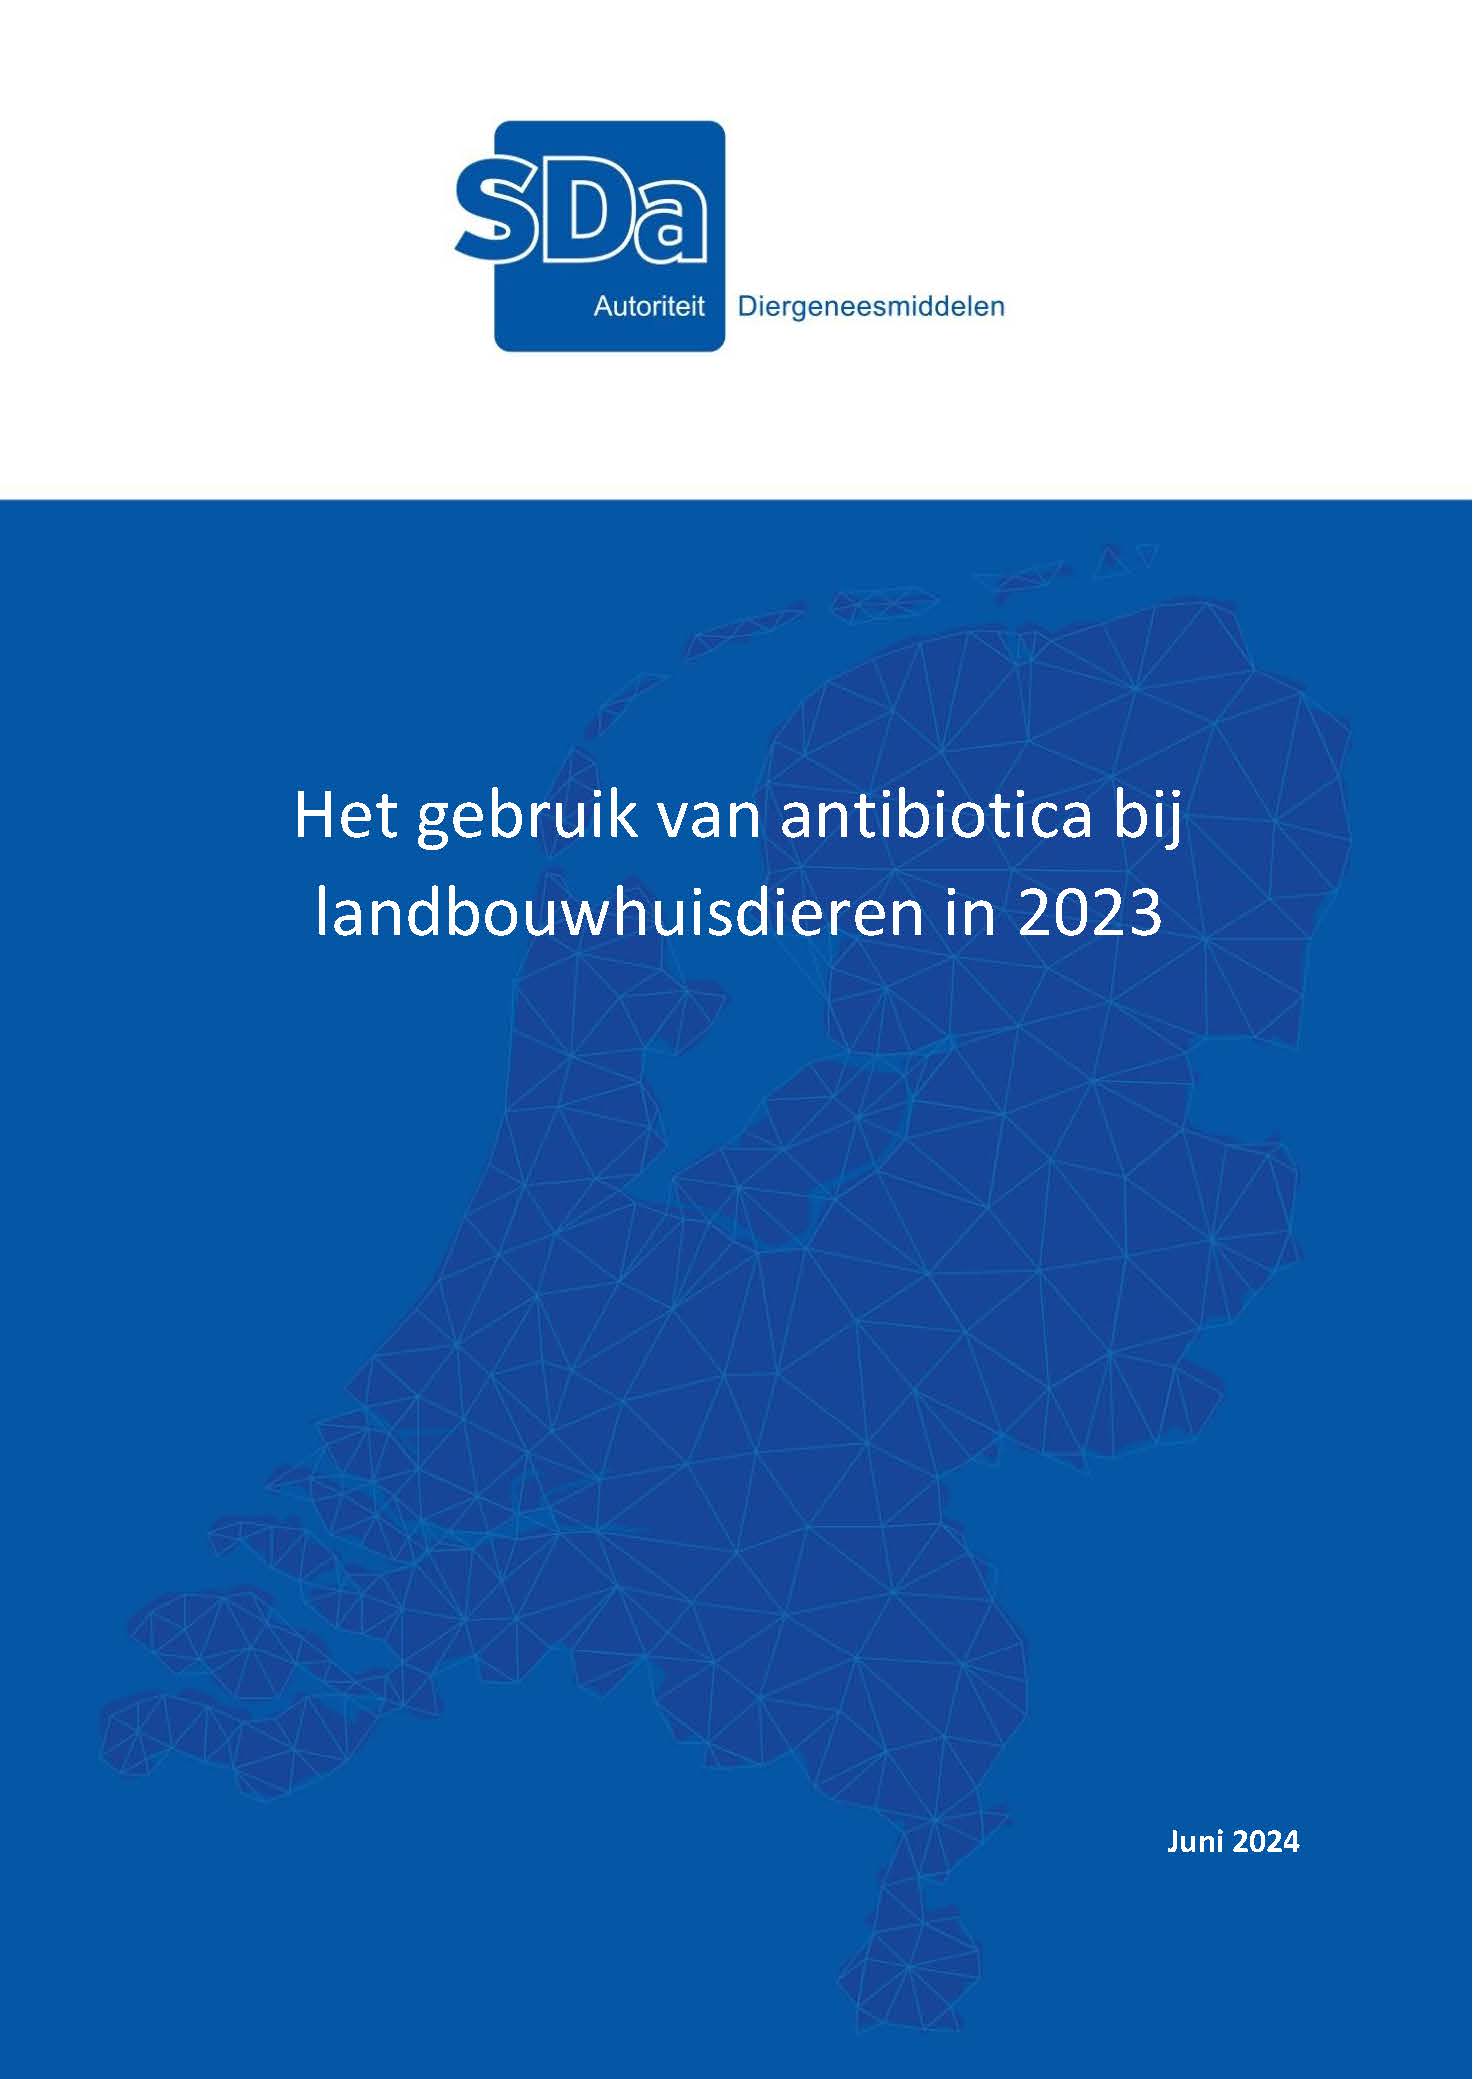 SDa-brief en -rapport 'antibioticumgebruik in 2023'
